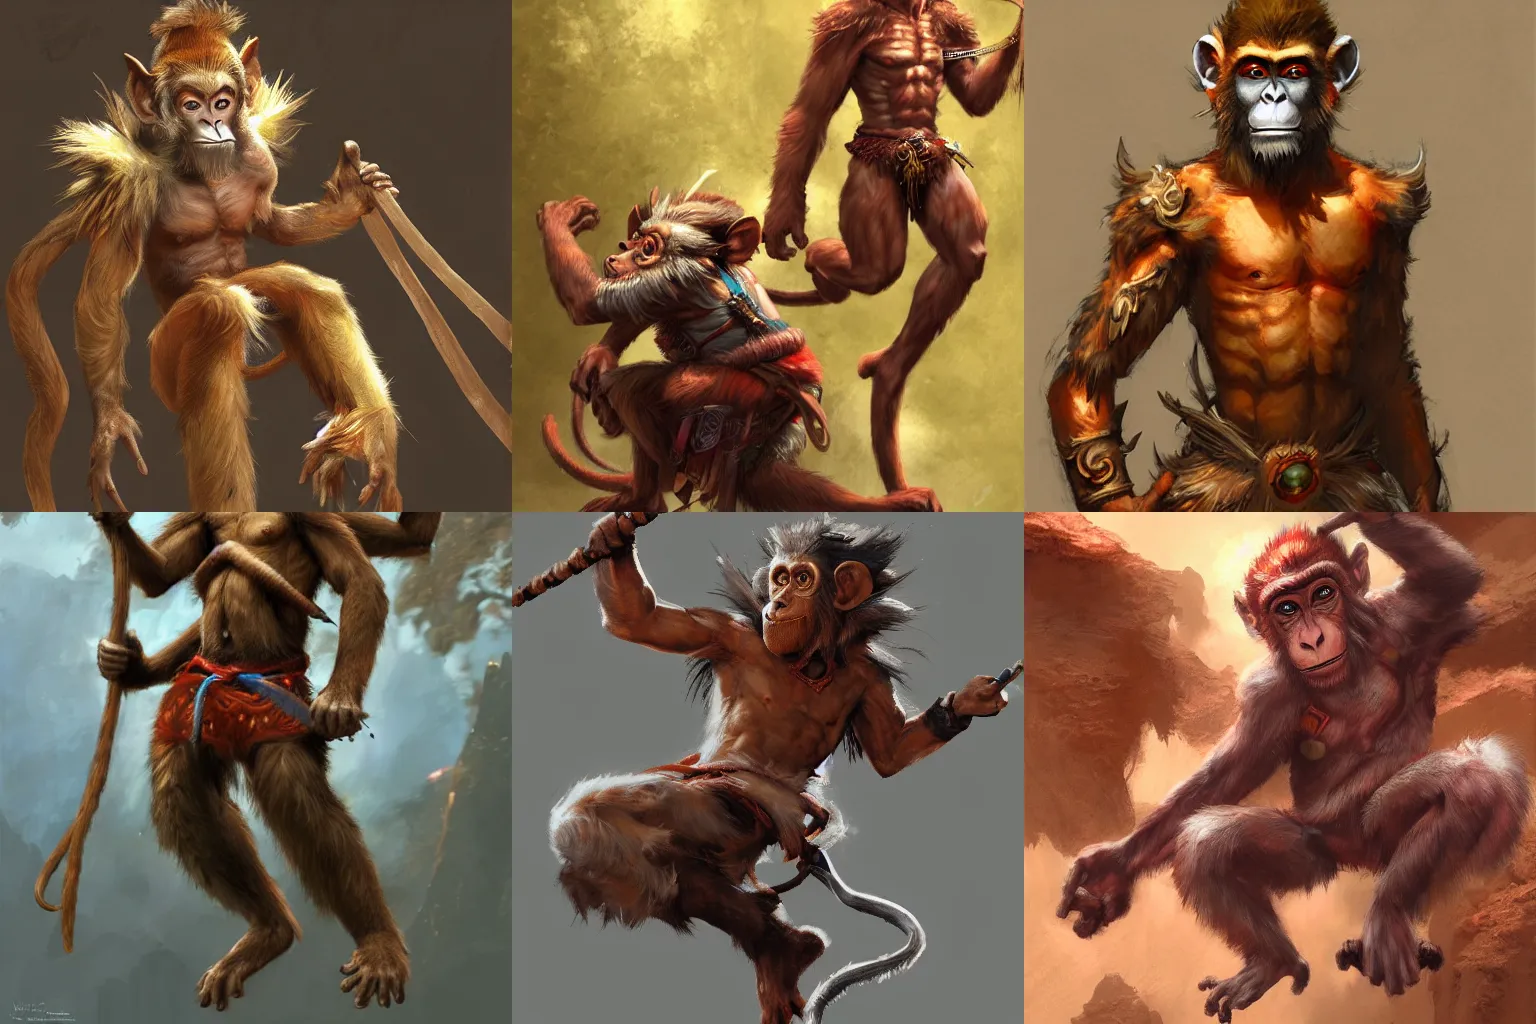 Prompt: humanoid monkey fantasy race wukong, monkey king, by craig mullins, featured on artstation